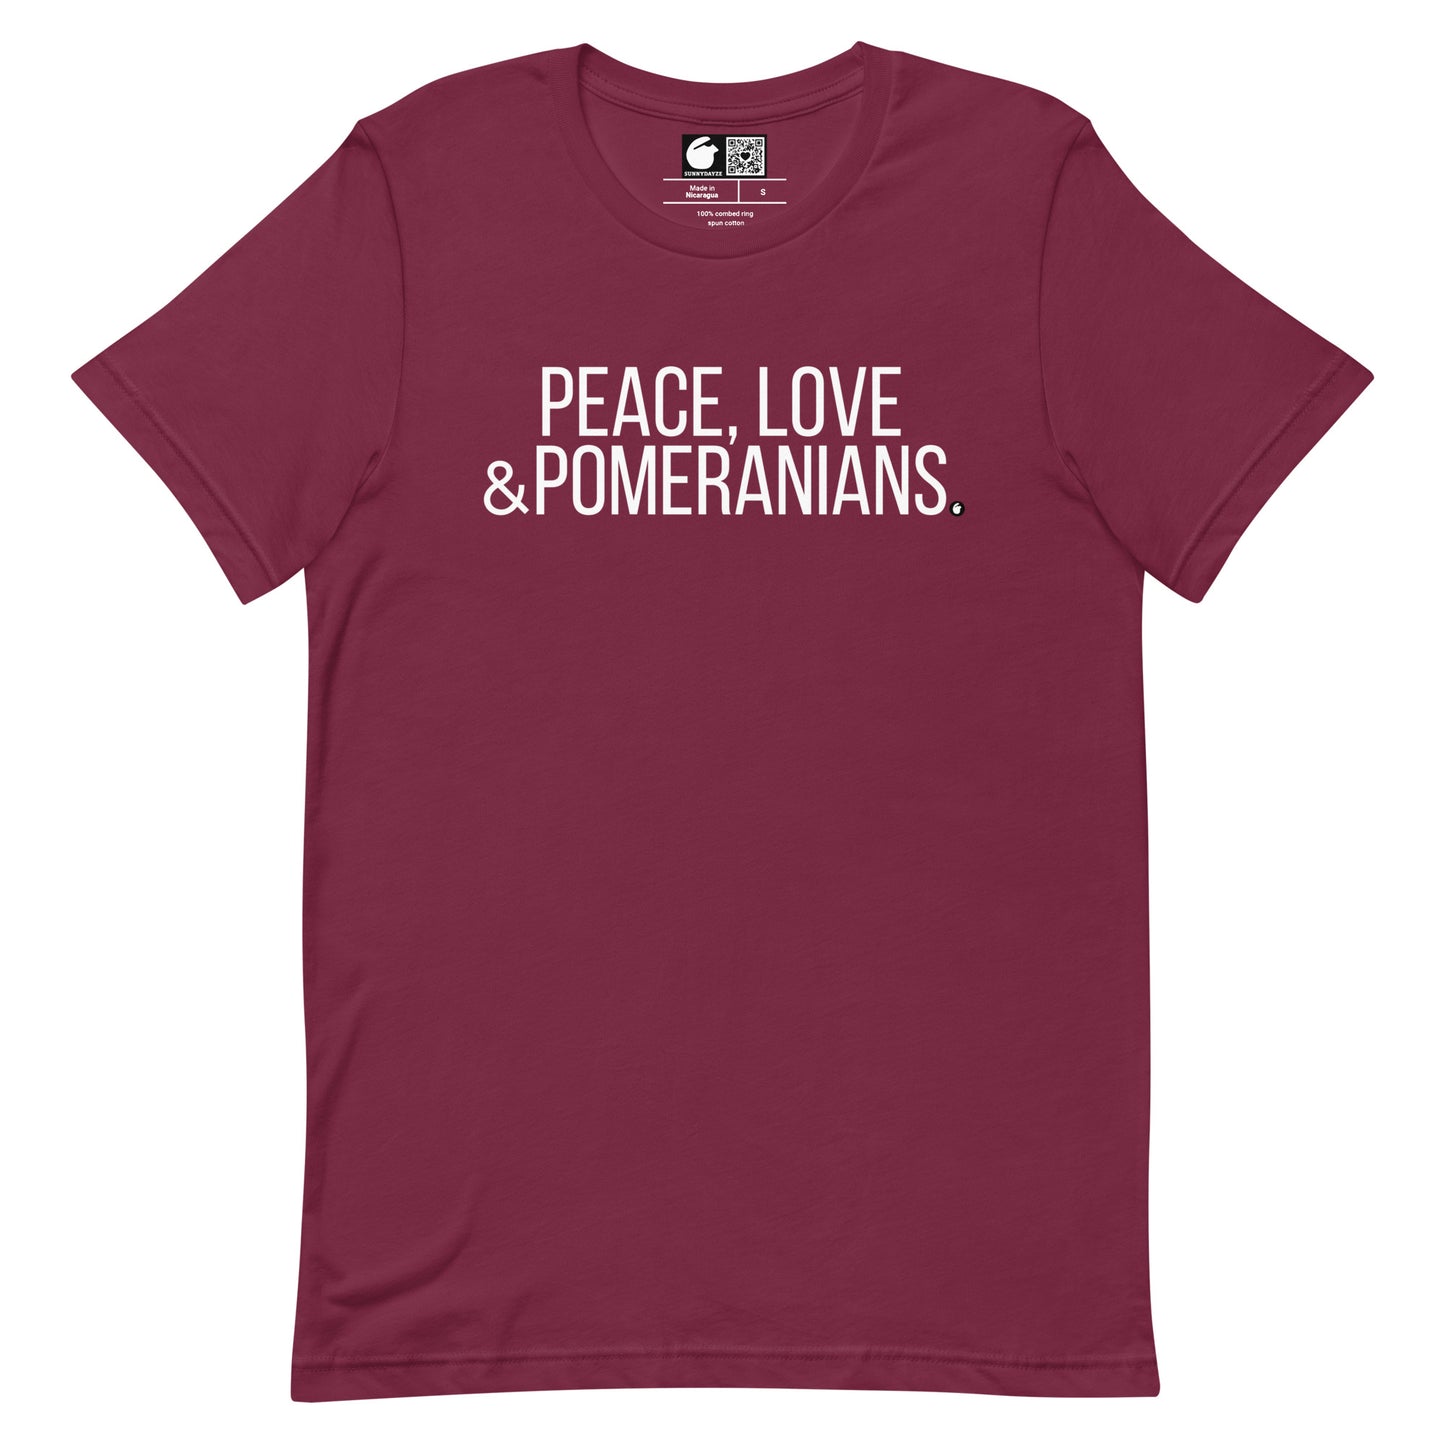 POMERANIANS Short-Sleeve Unisex t-shirt